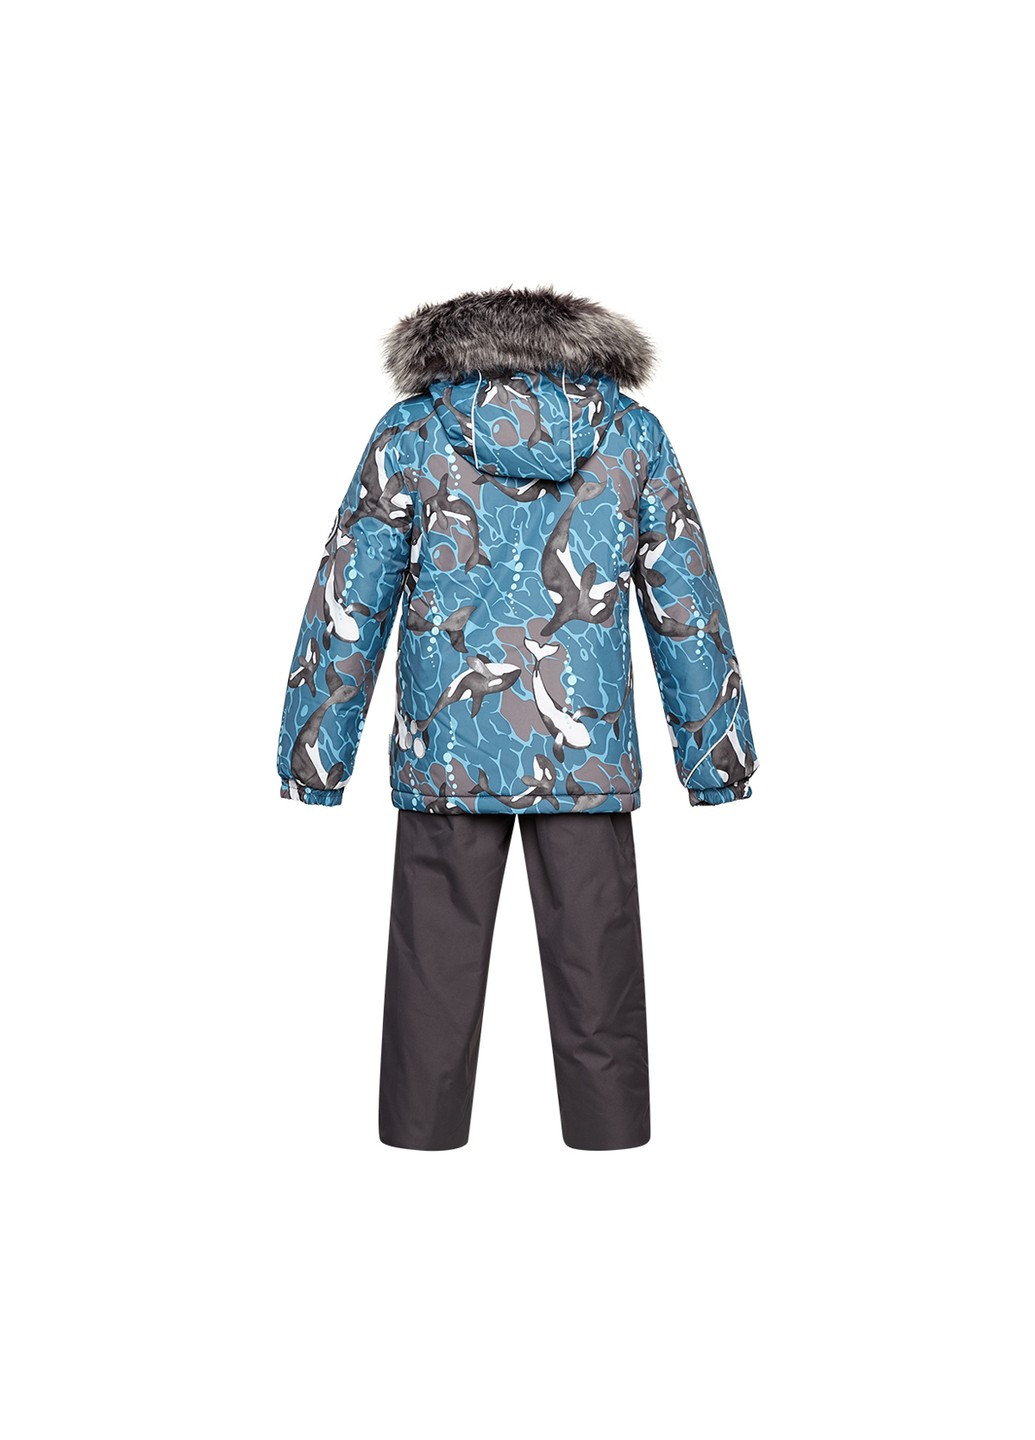 Бирюзовый зимний комплект зимний (куртка + полукомбинезон) dante 1 Huppa